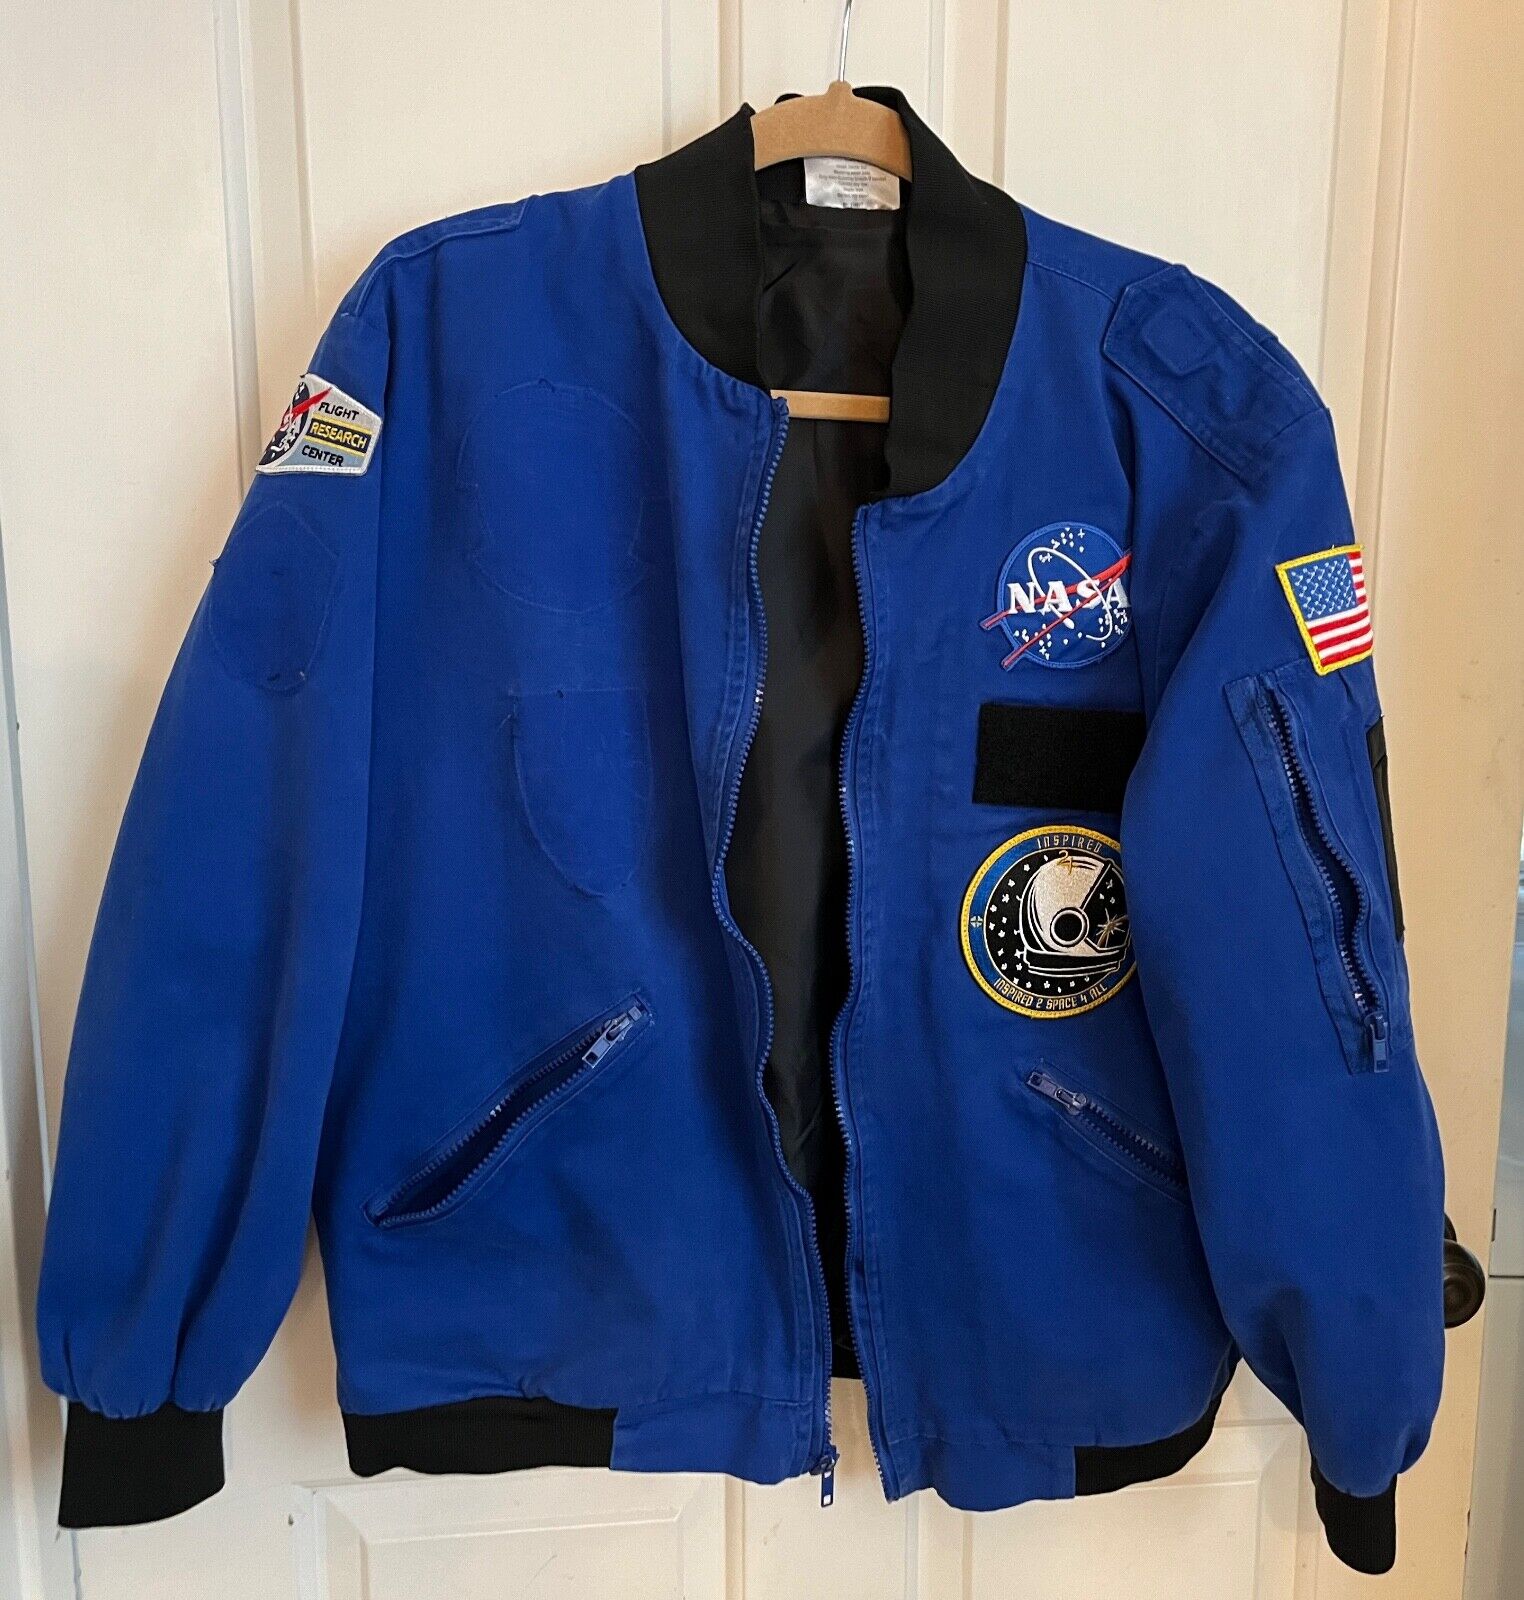 Blue NASA Flight Jacket - Used w/patches - Small